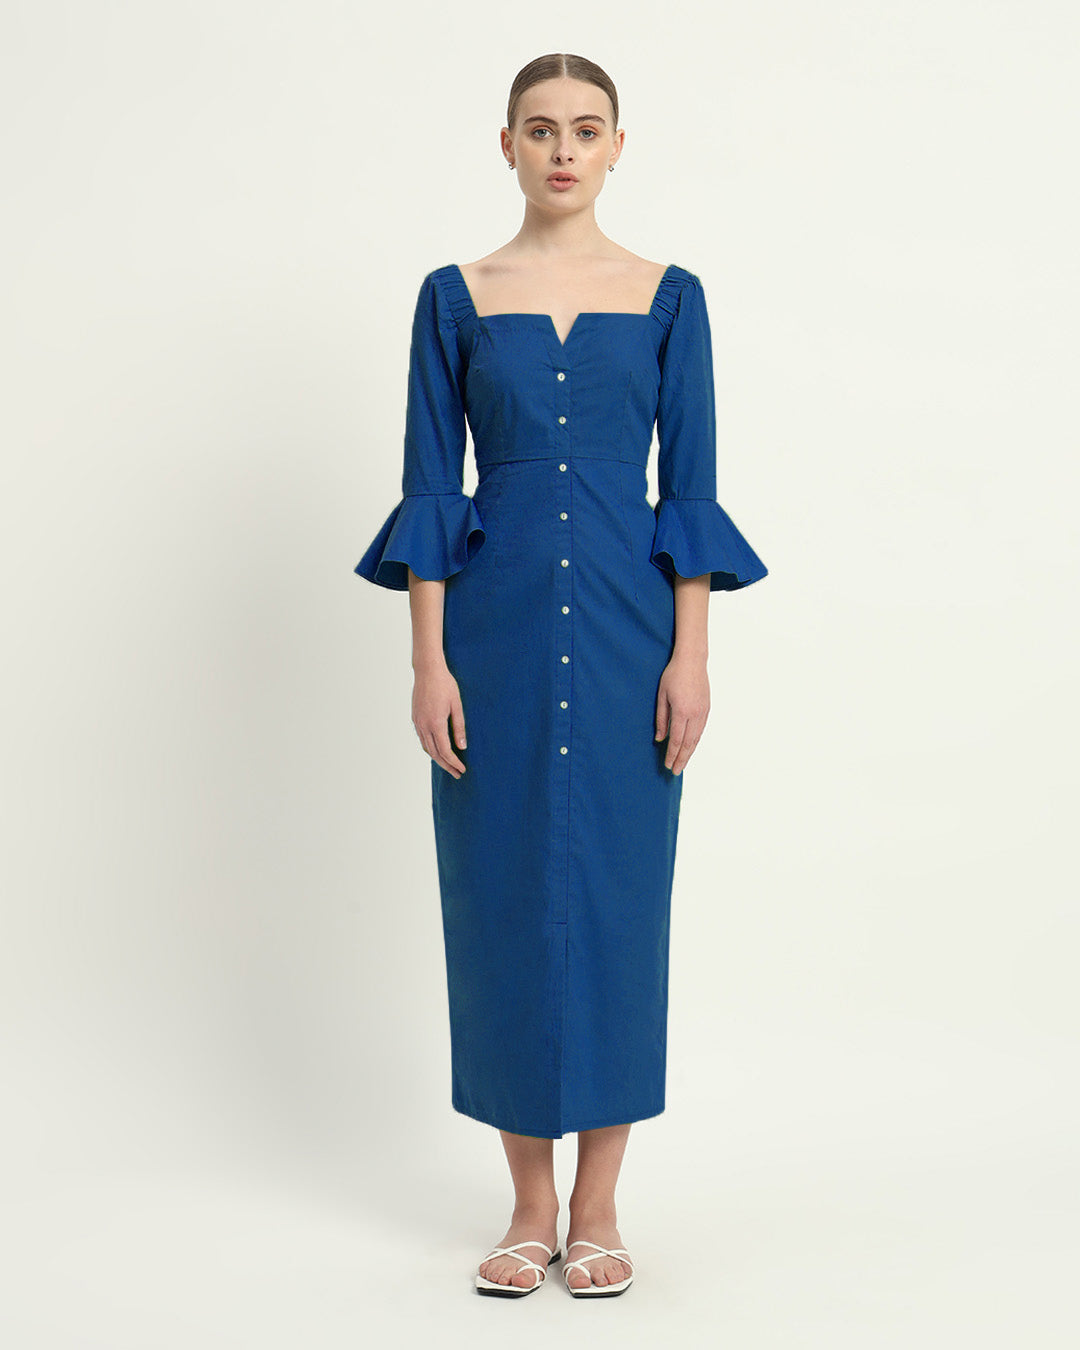 The Cobalt Rosendale Cotton Dress